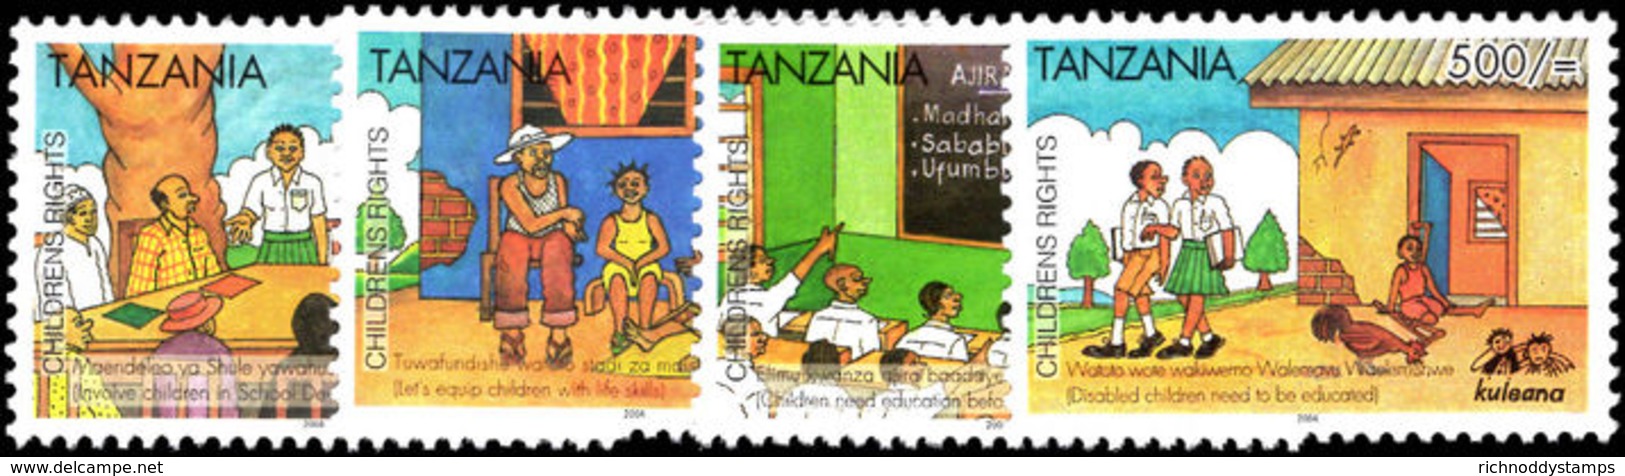 Tanzania 2004 Childrens Rights Unmounted Mint. - Tanzania (1964-...)